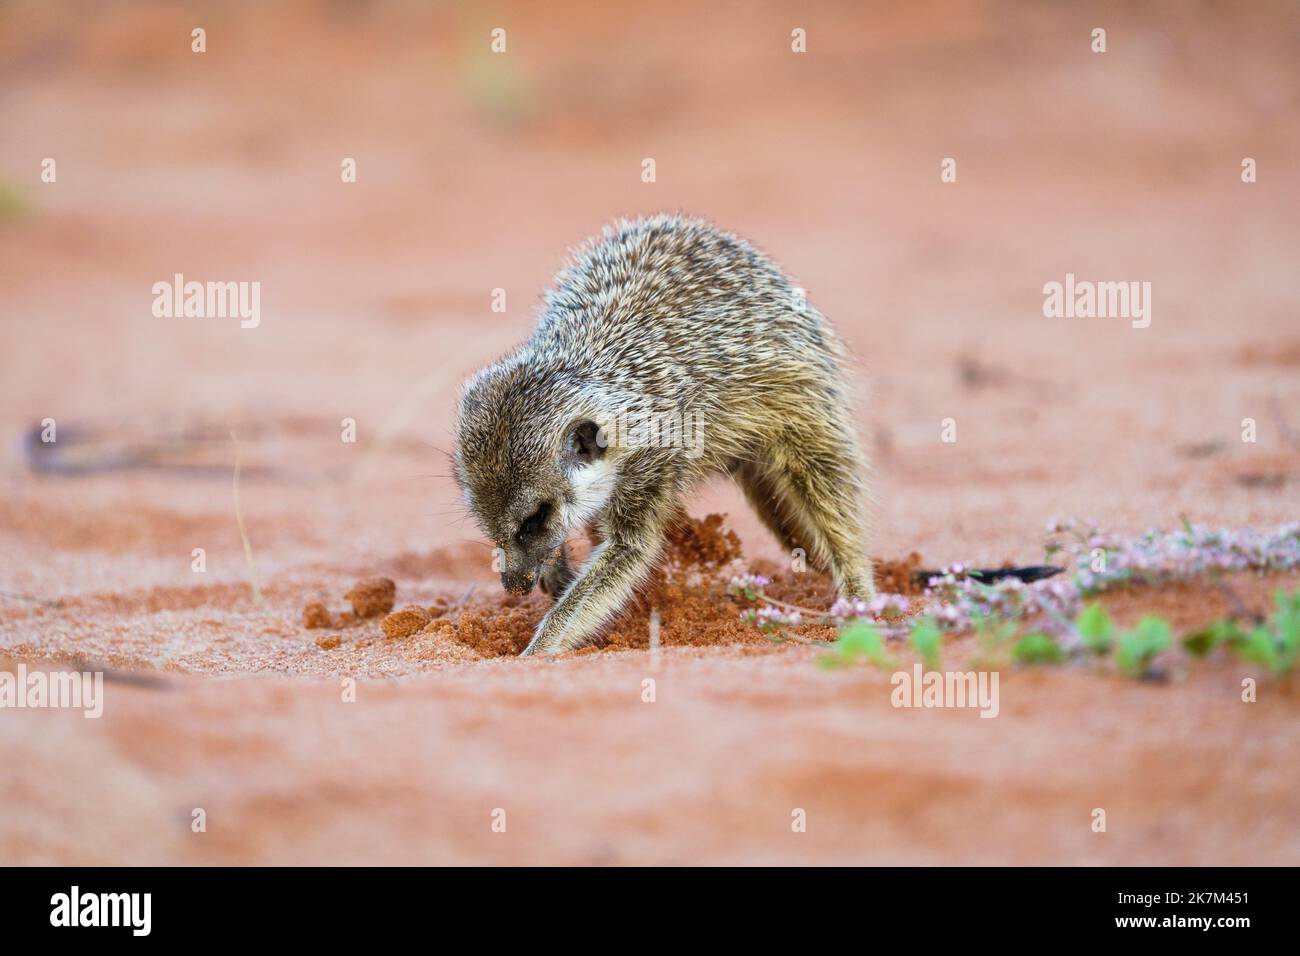 Erdmännchen (Suricata suricatta) gräbt in rotem Boden nach Insekten, Viechern, Nahrung. Kalahari, Kgalagadi Transfrontier Park, Südafrika Stockfoto